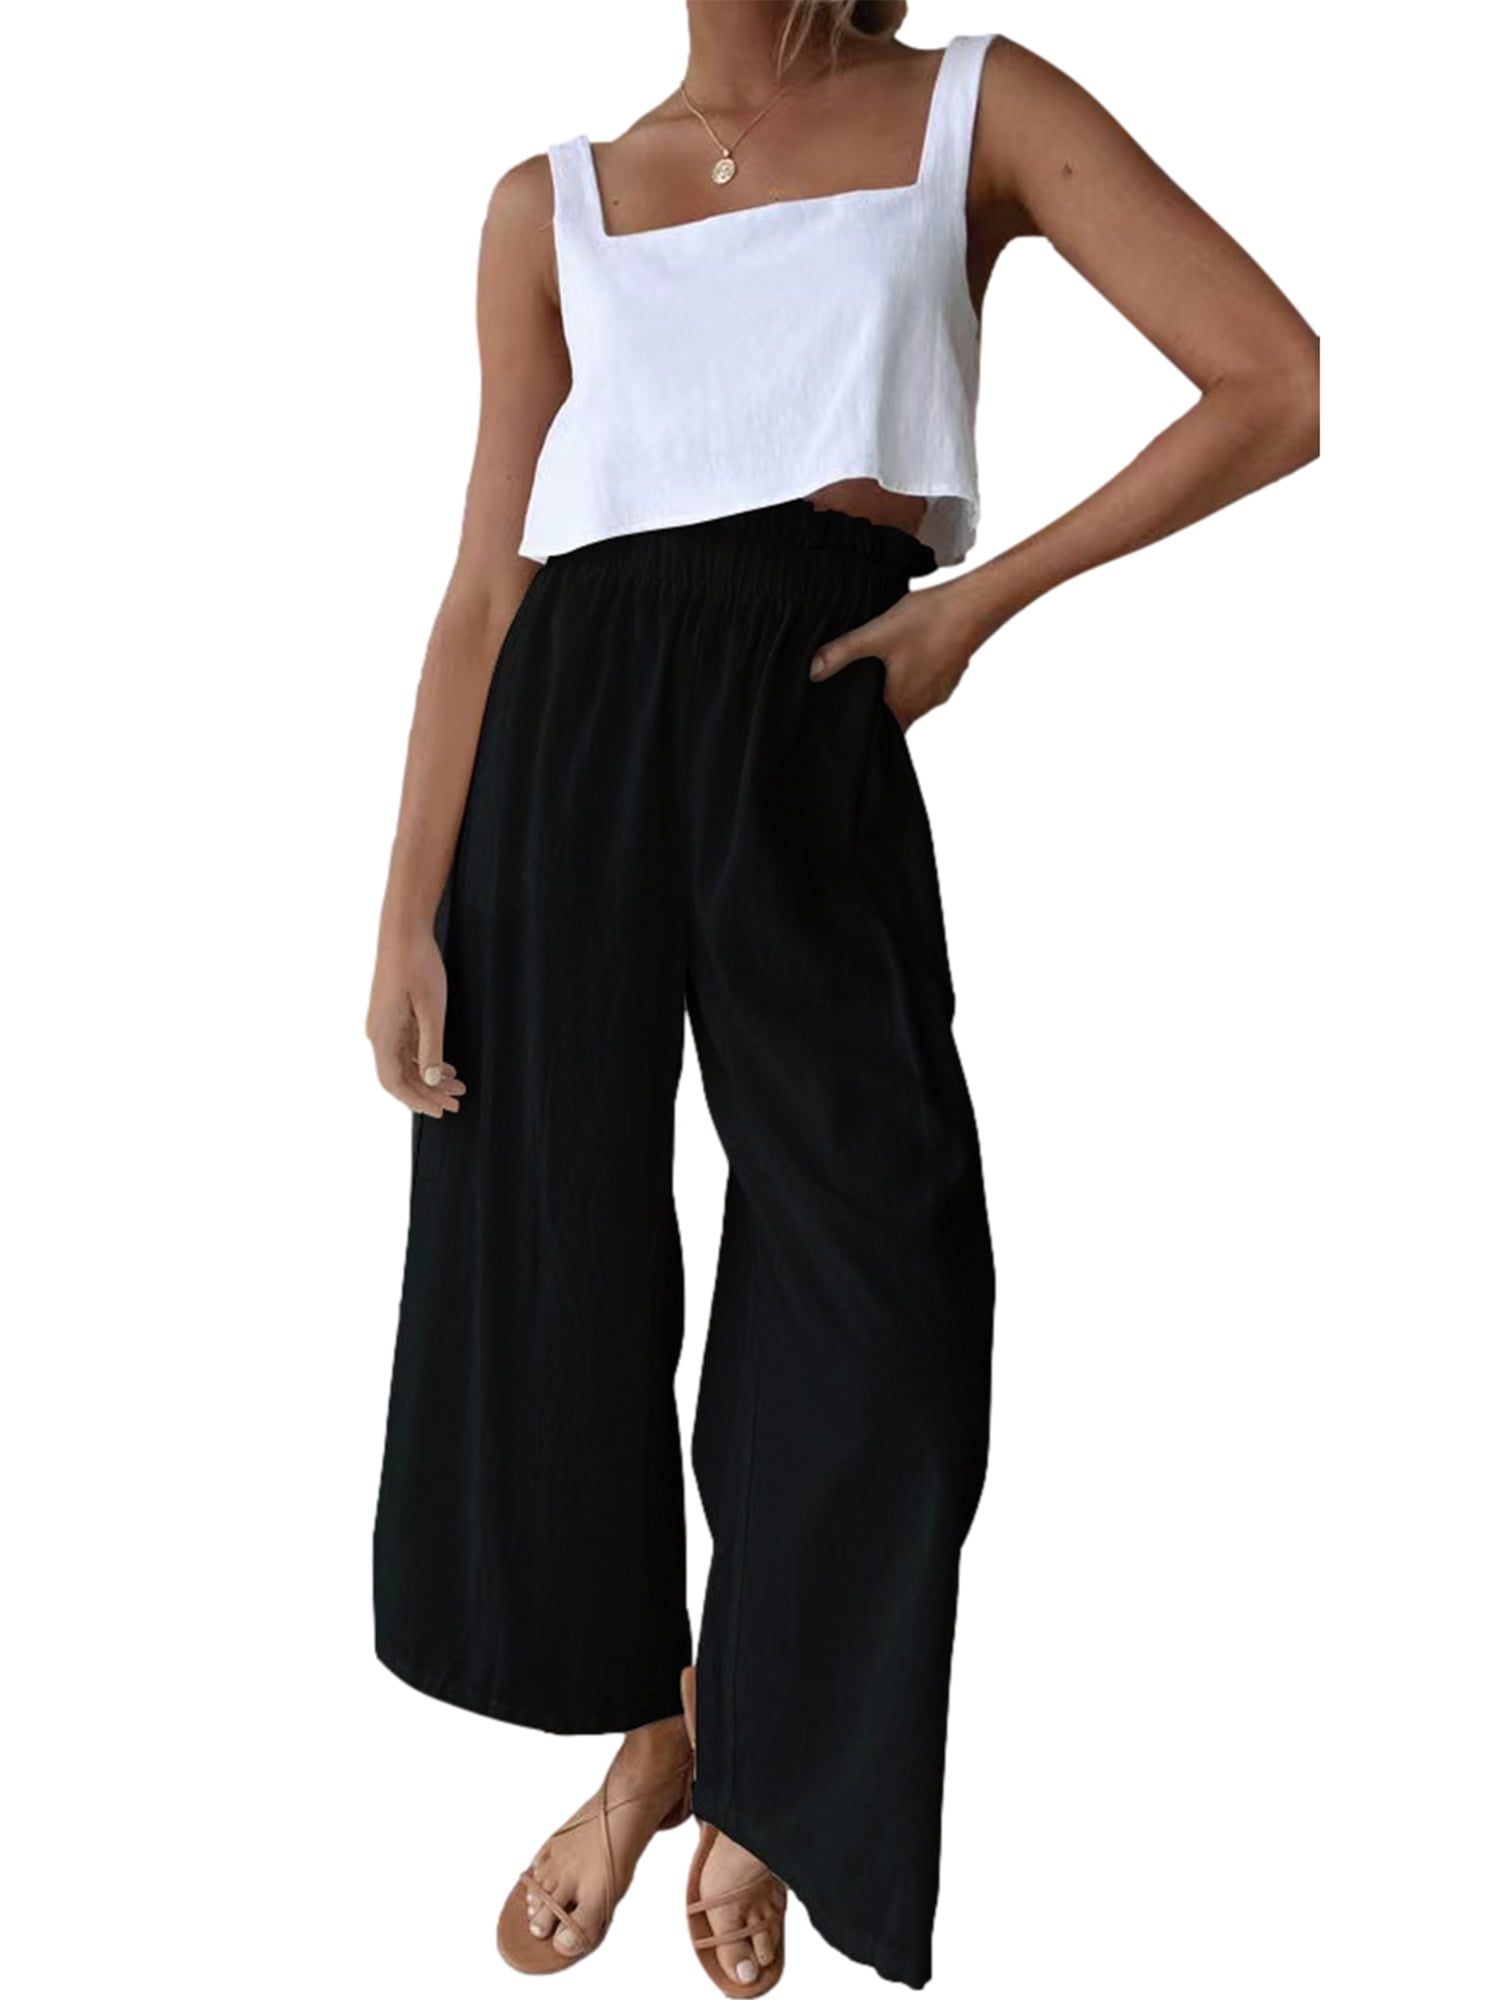 JYYYBF Women High Waist Casual Wide Leg Long Palazzo Pants Stretchy Trousers  with Pockets Black XL - Walmart.com